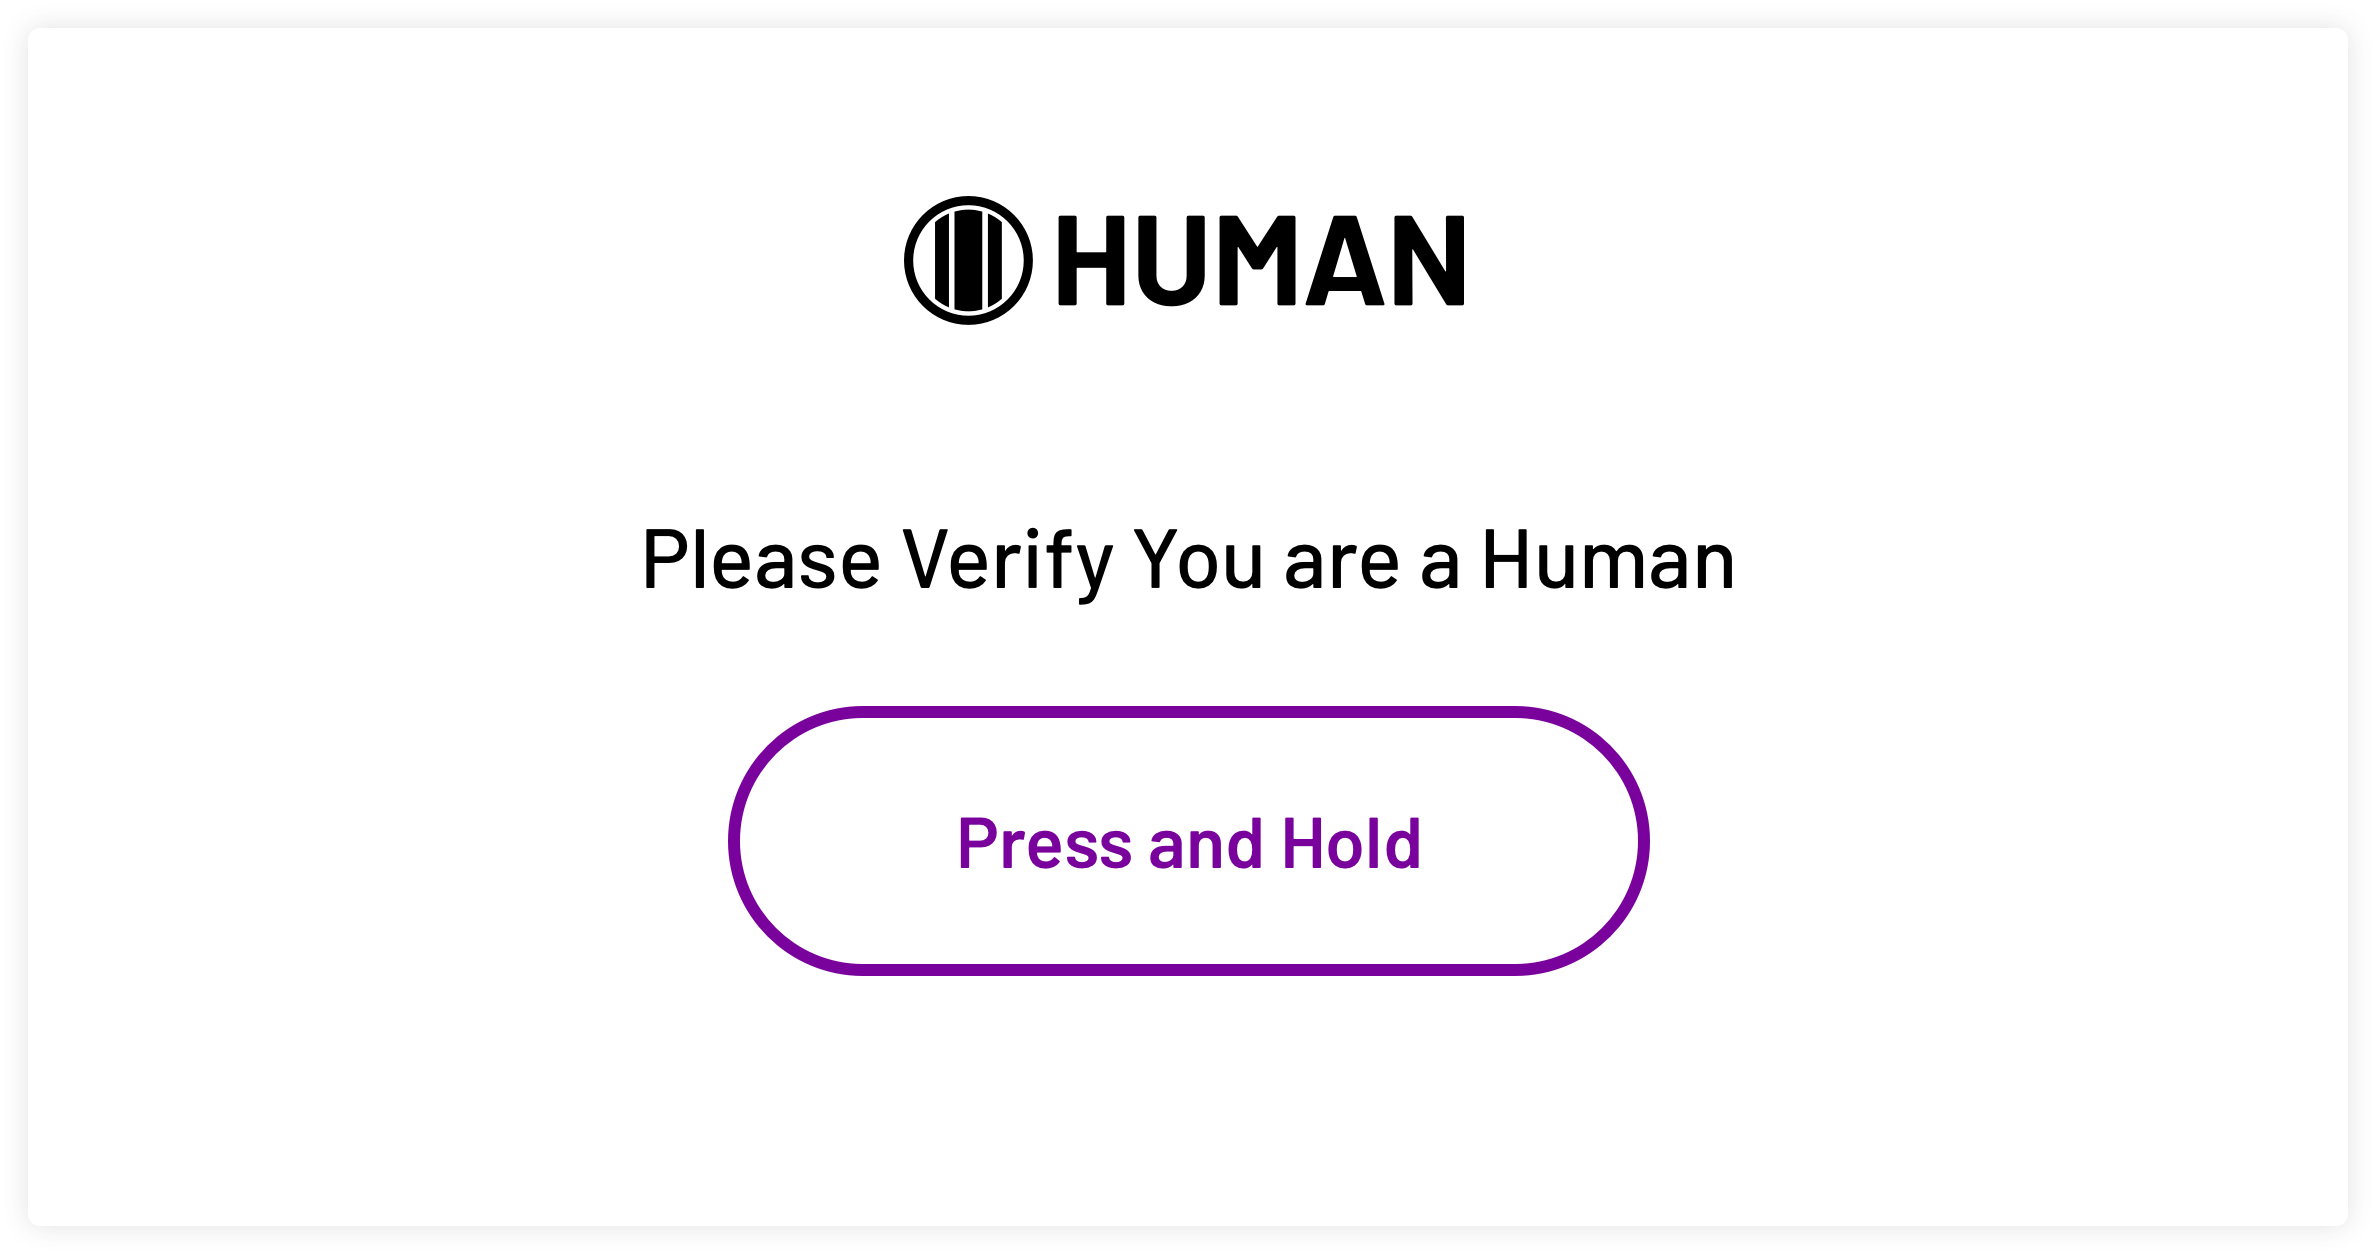 HMN_Human-Challenge-login